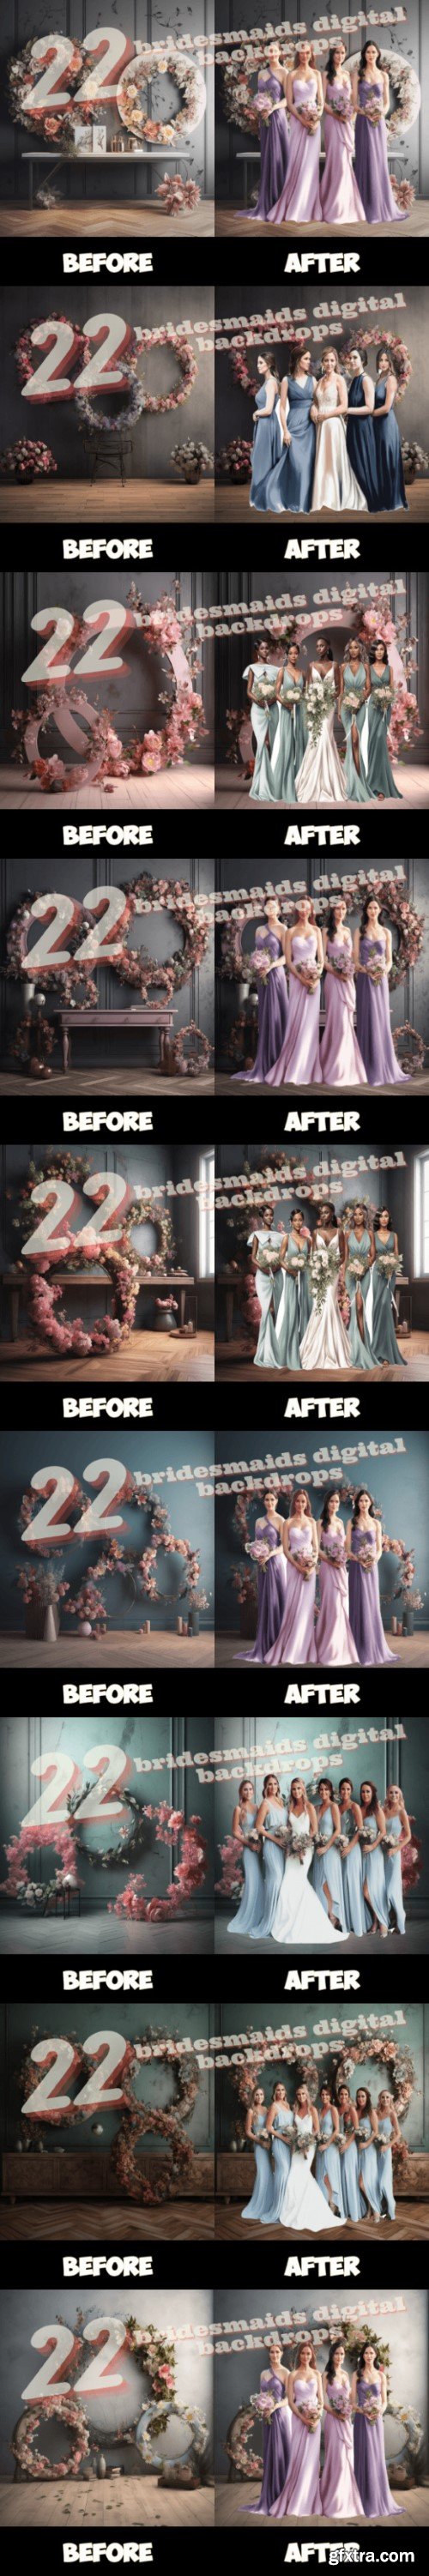 Bridesmaids Digital Backdrops